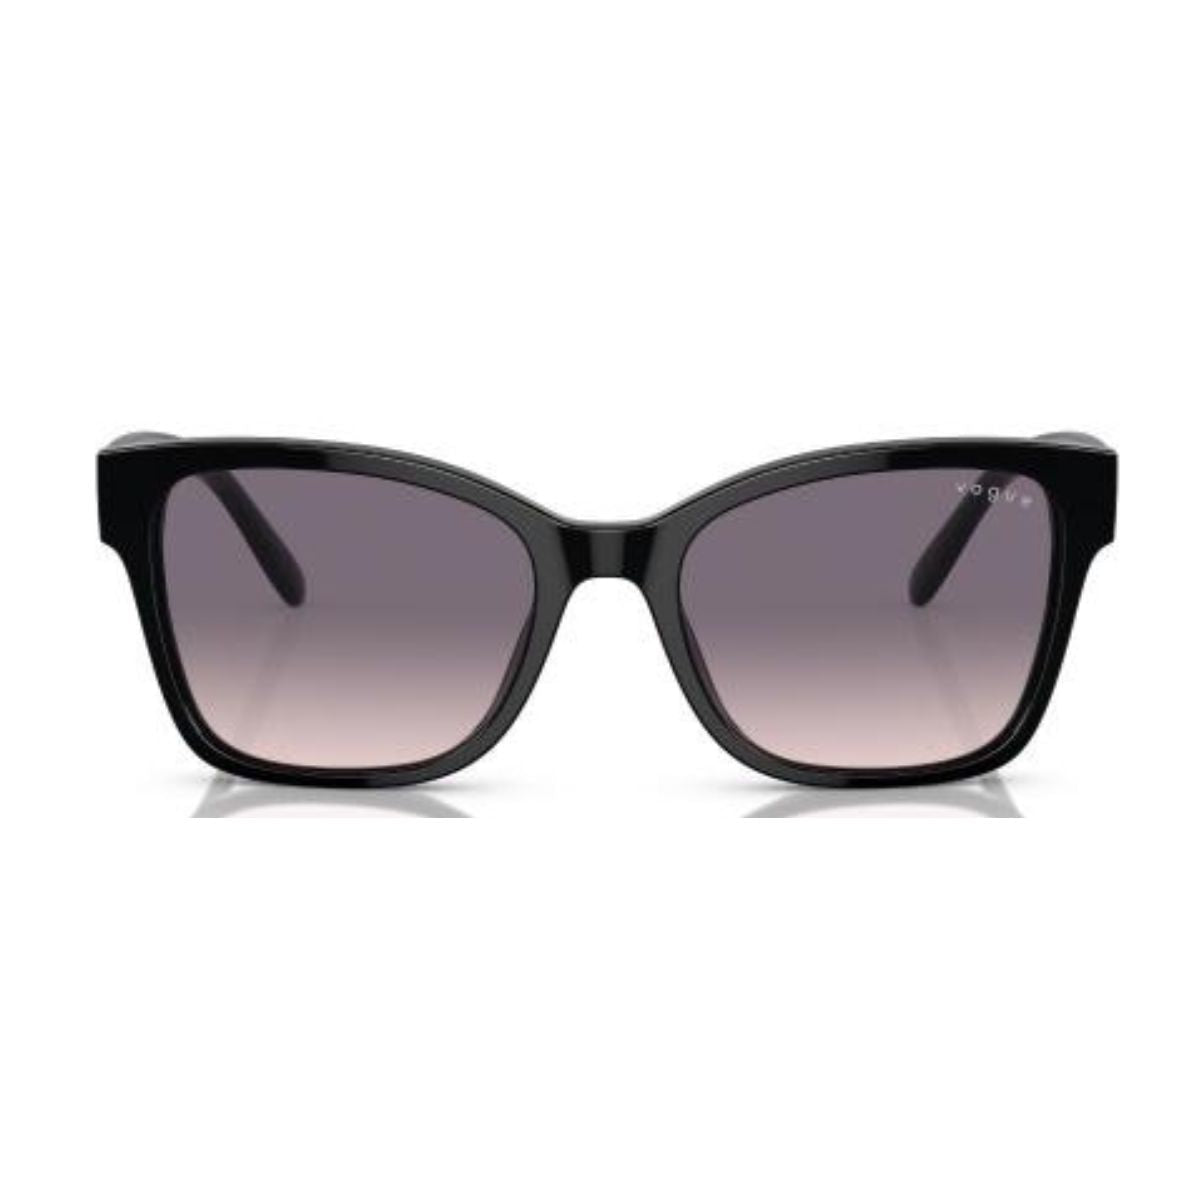 "Buy Stylish Vogue Cat Eye Sunglasses For Womens At Optorium"